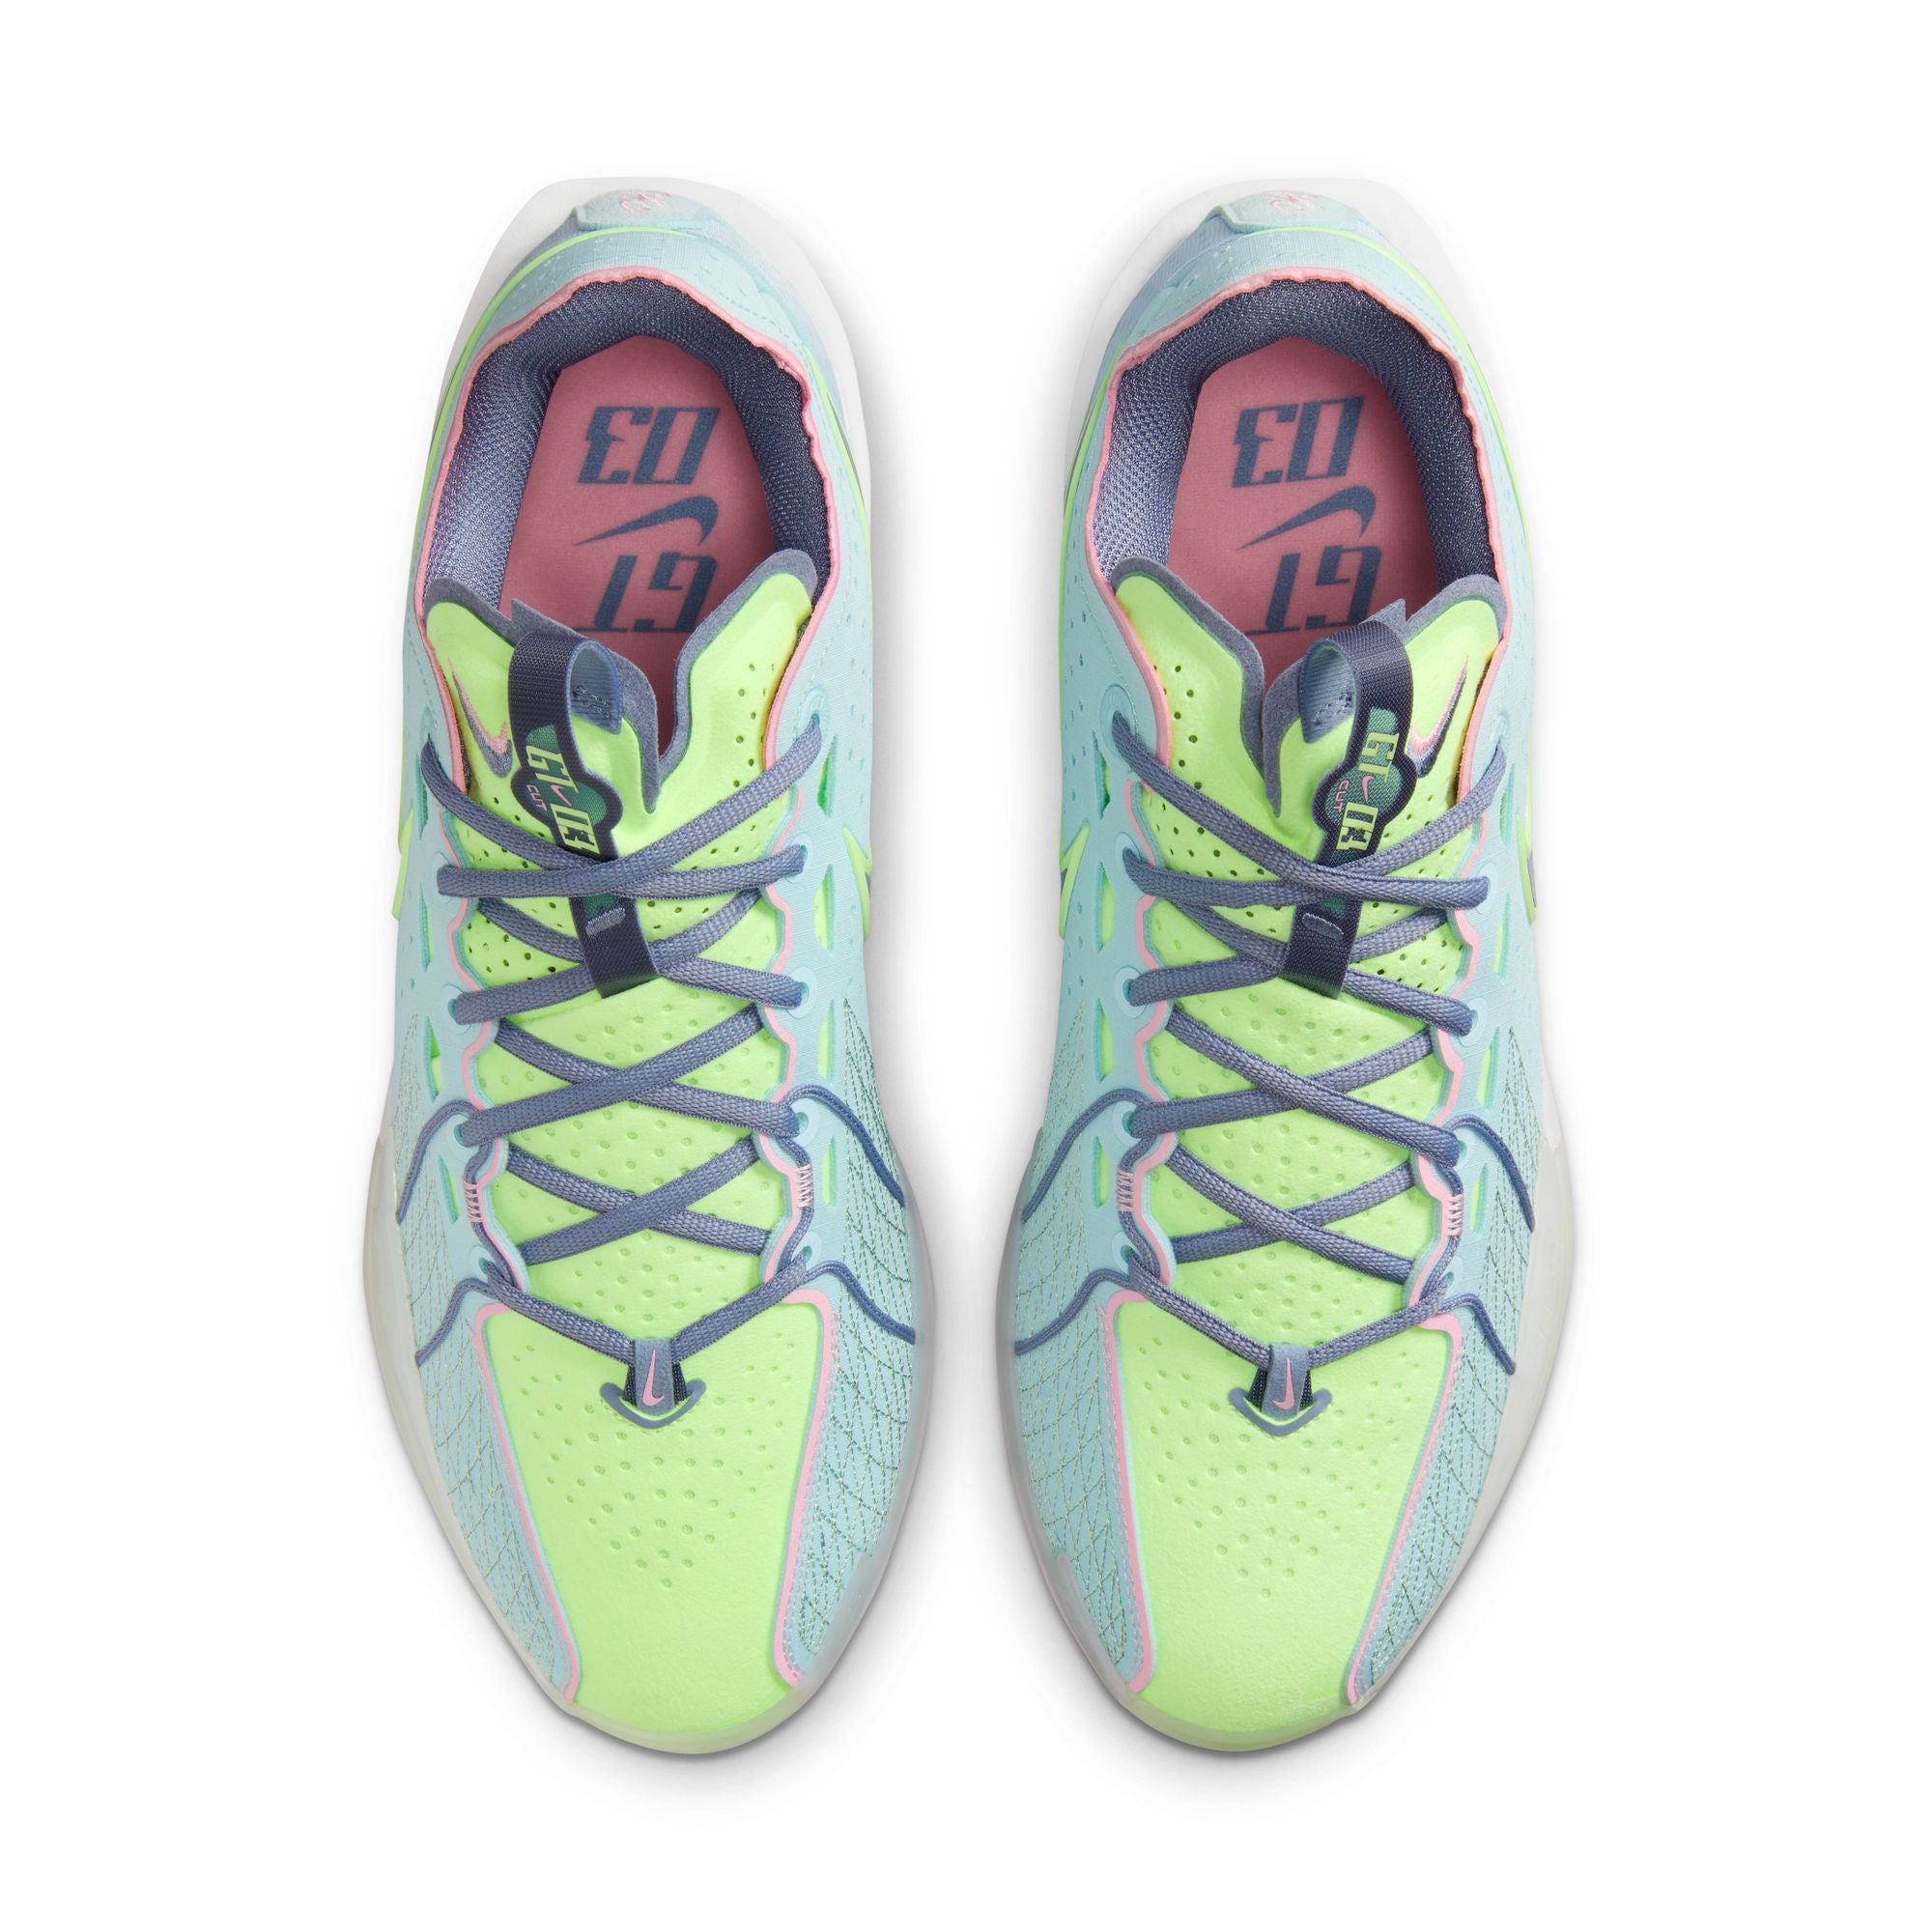 Nike G.T. Cut 3 Basketball Shoes